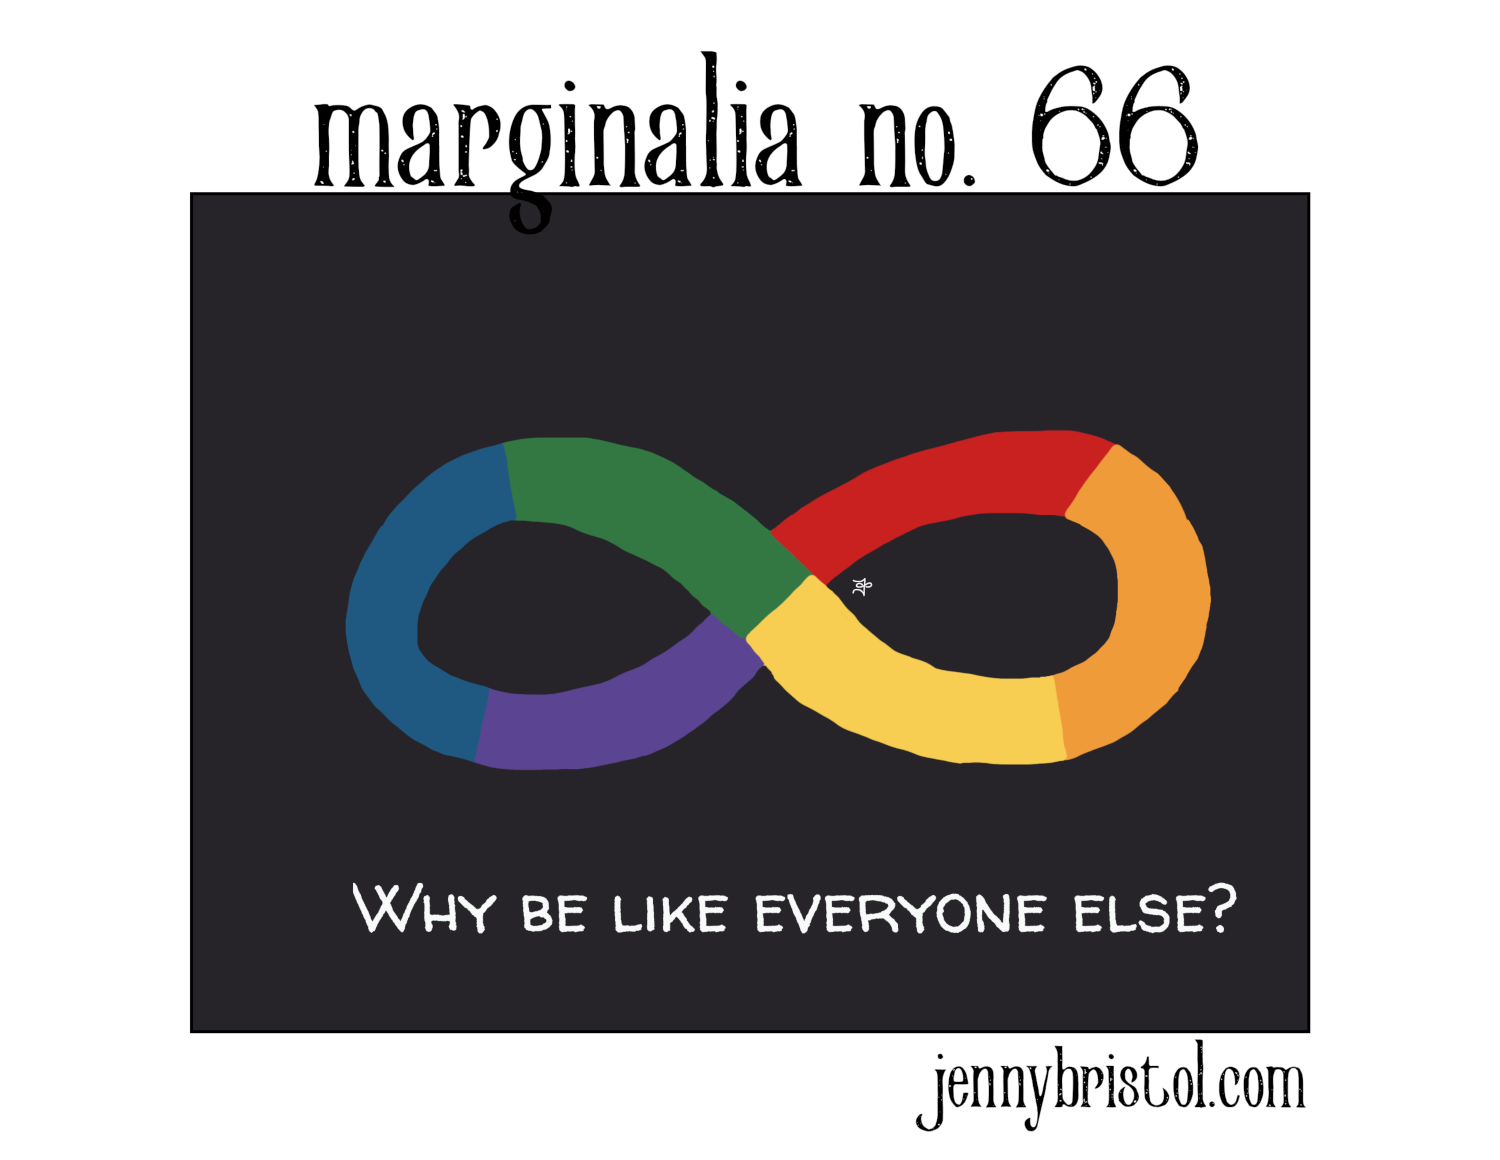 Marginalia No. 66 to post